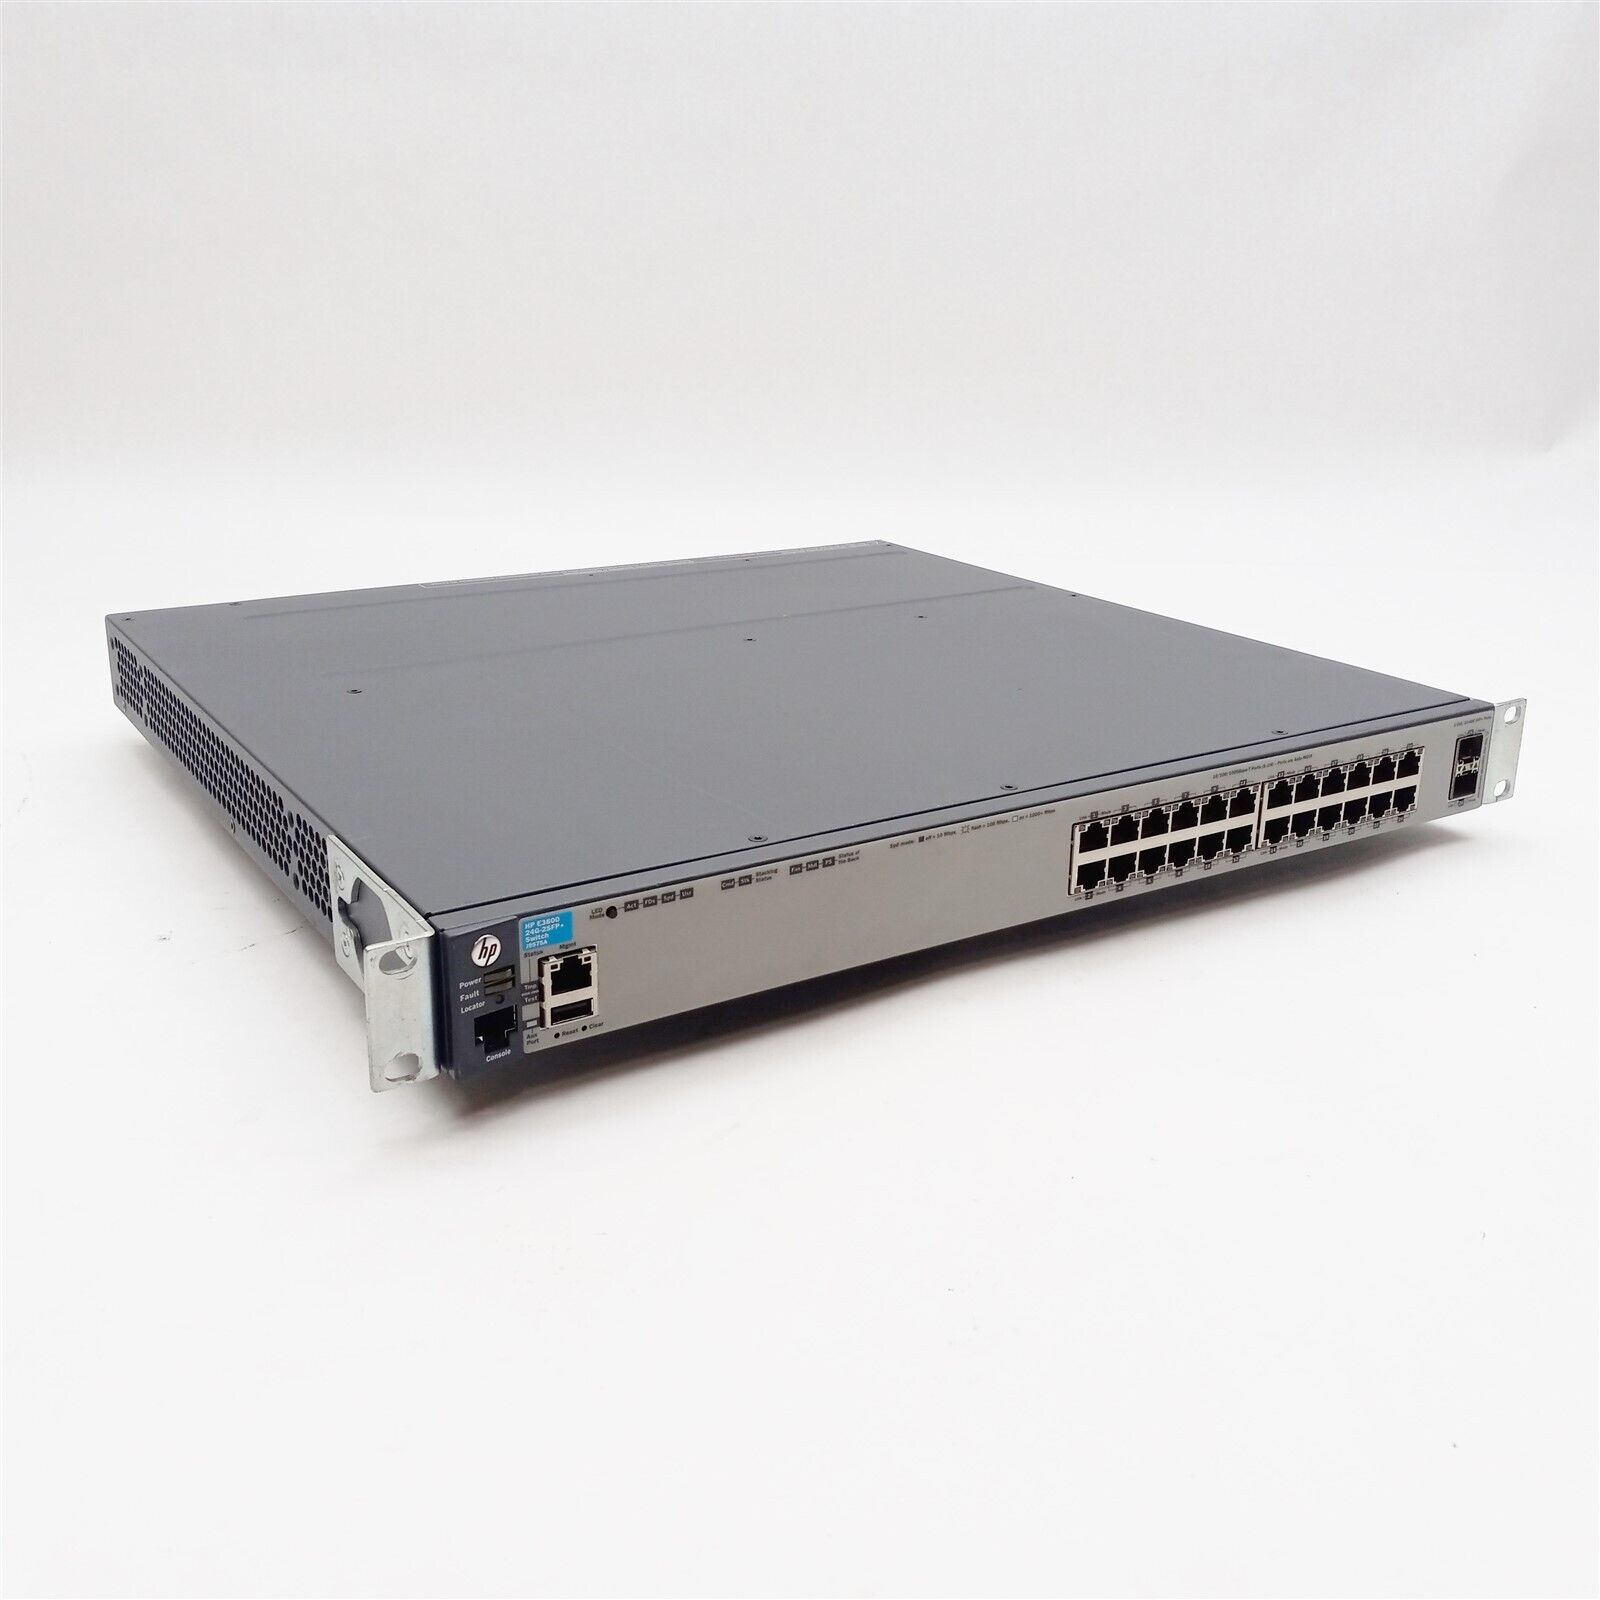 HP E3800-24G-2SFP+ J9575A 24-Port Managed Gigabit Ethernet Network Switch 1*PSU